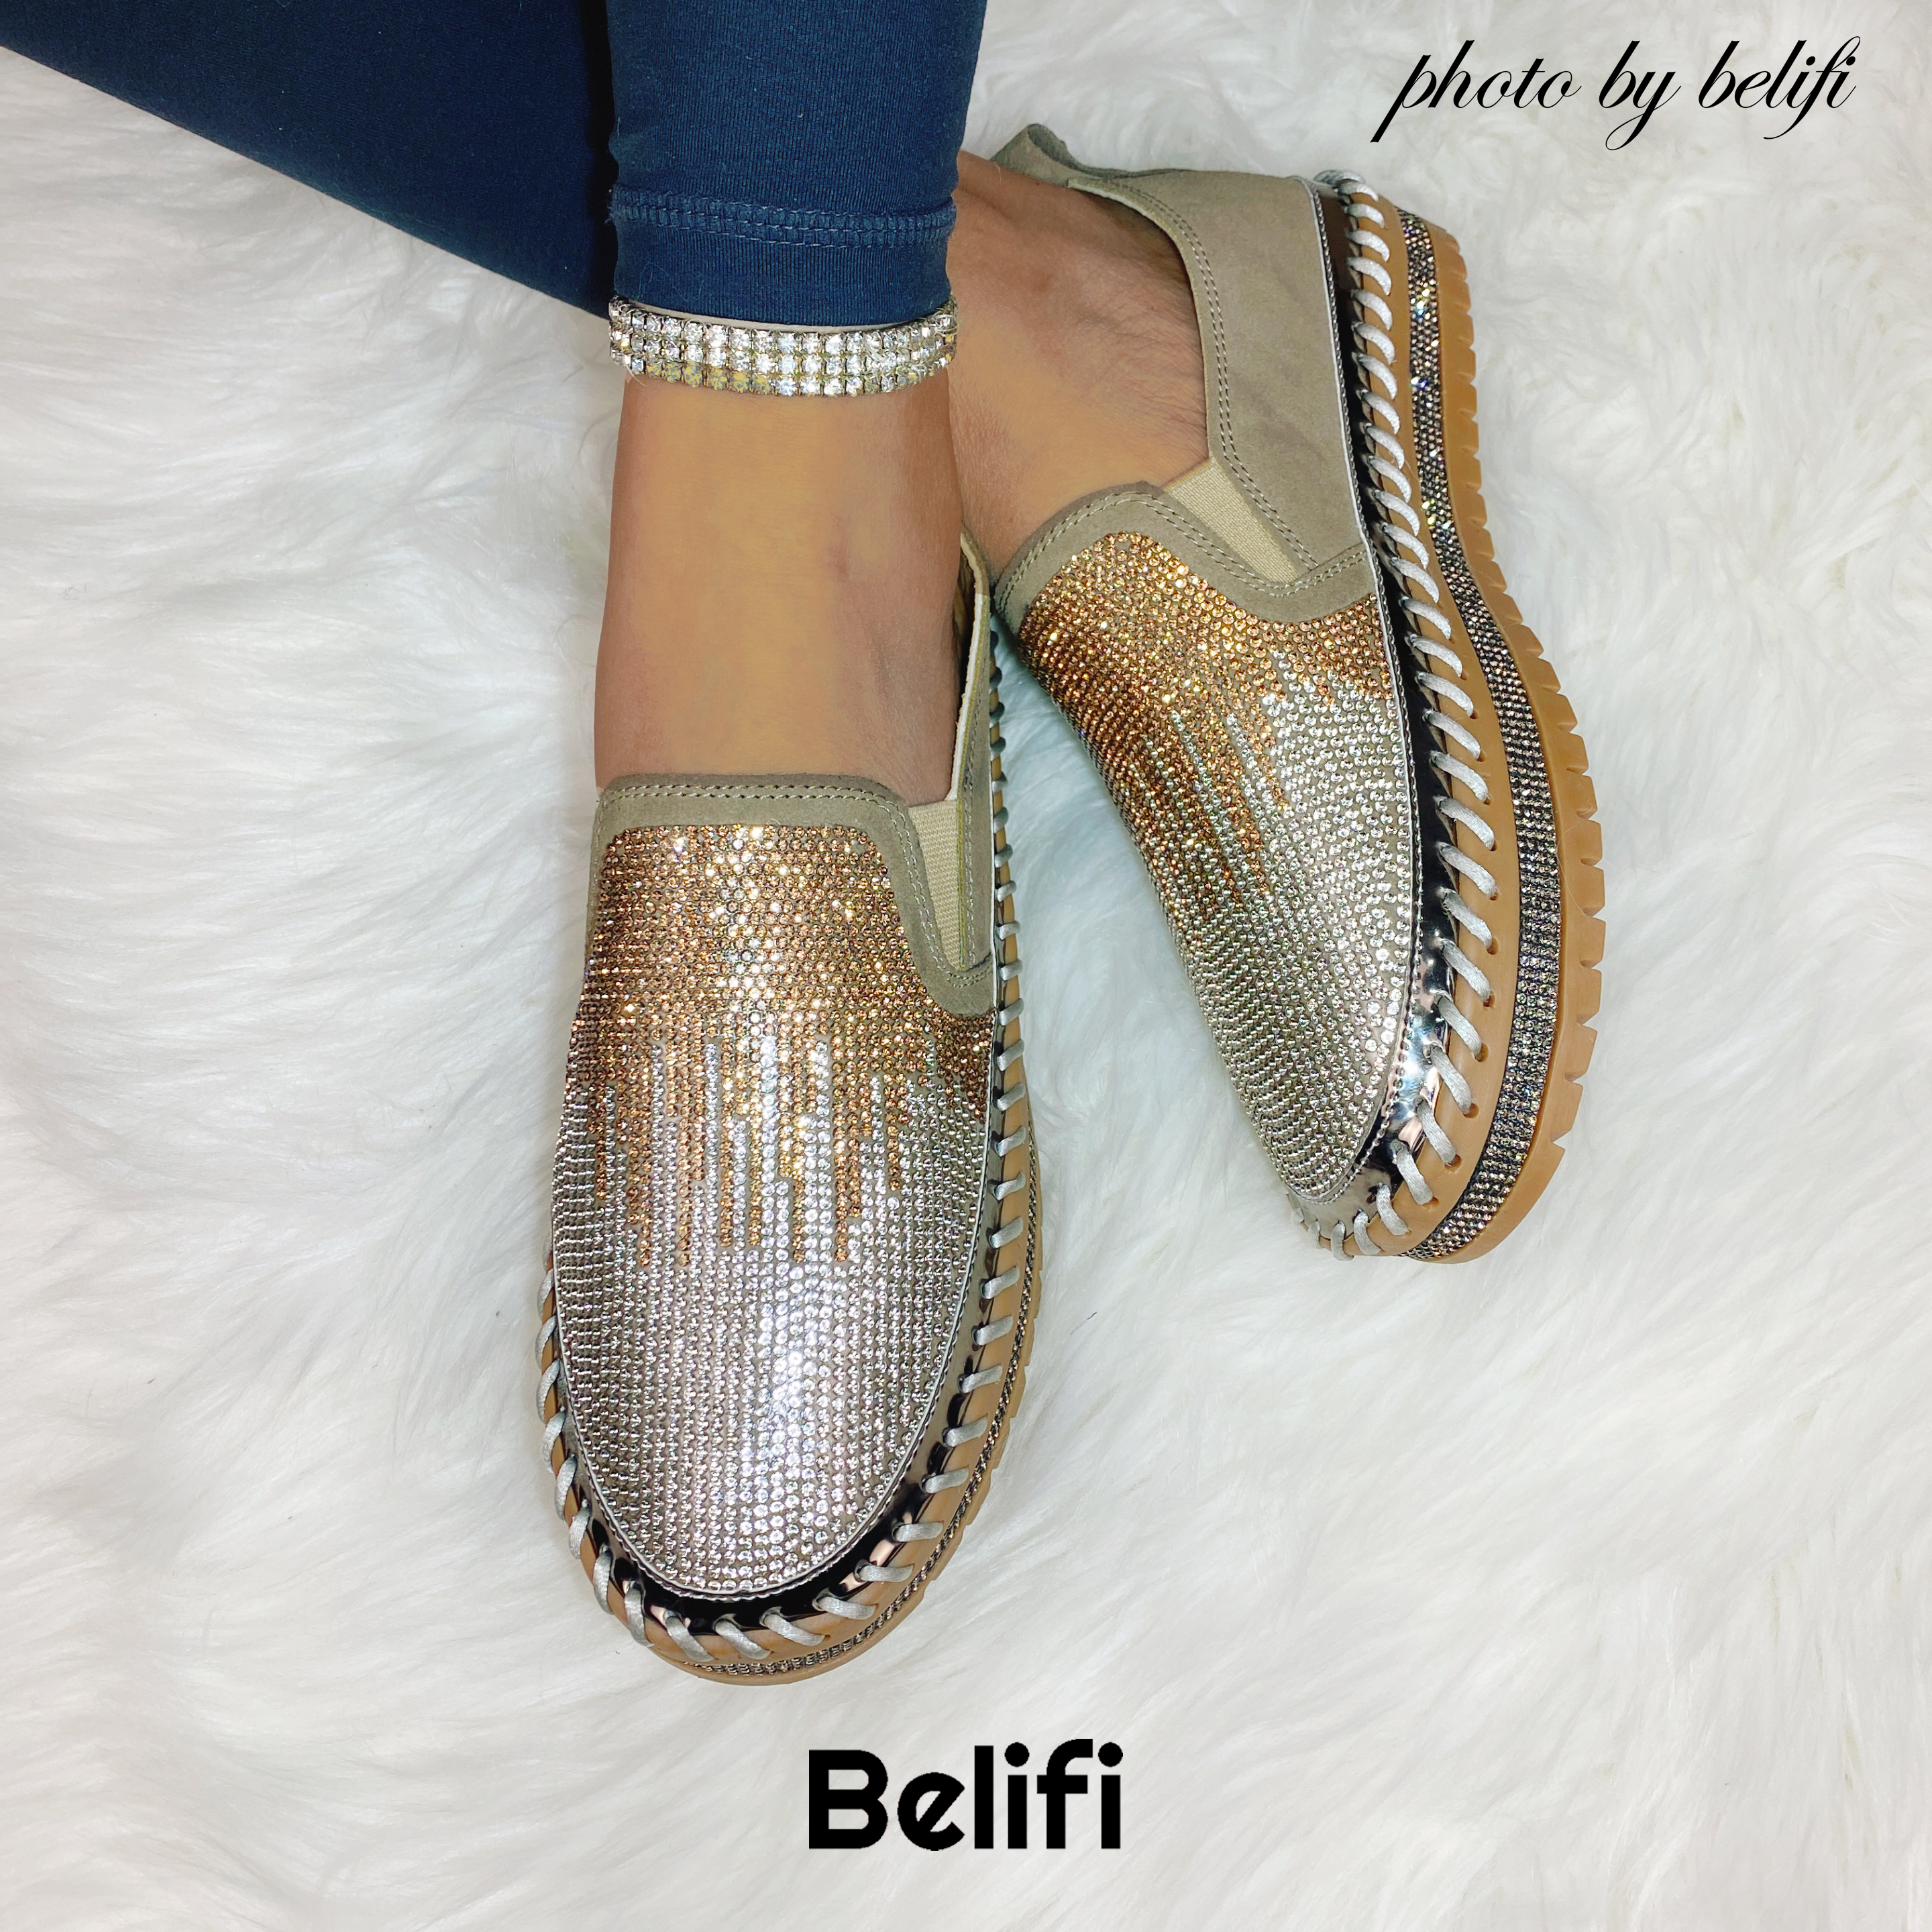 Belifi Shoes